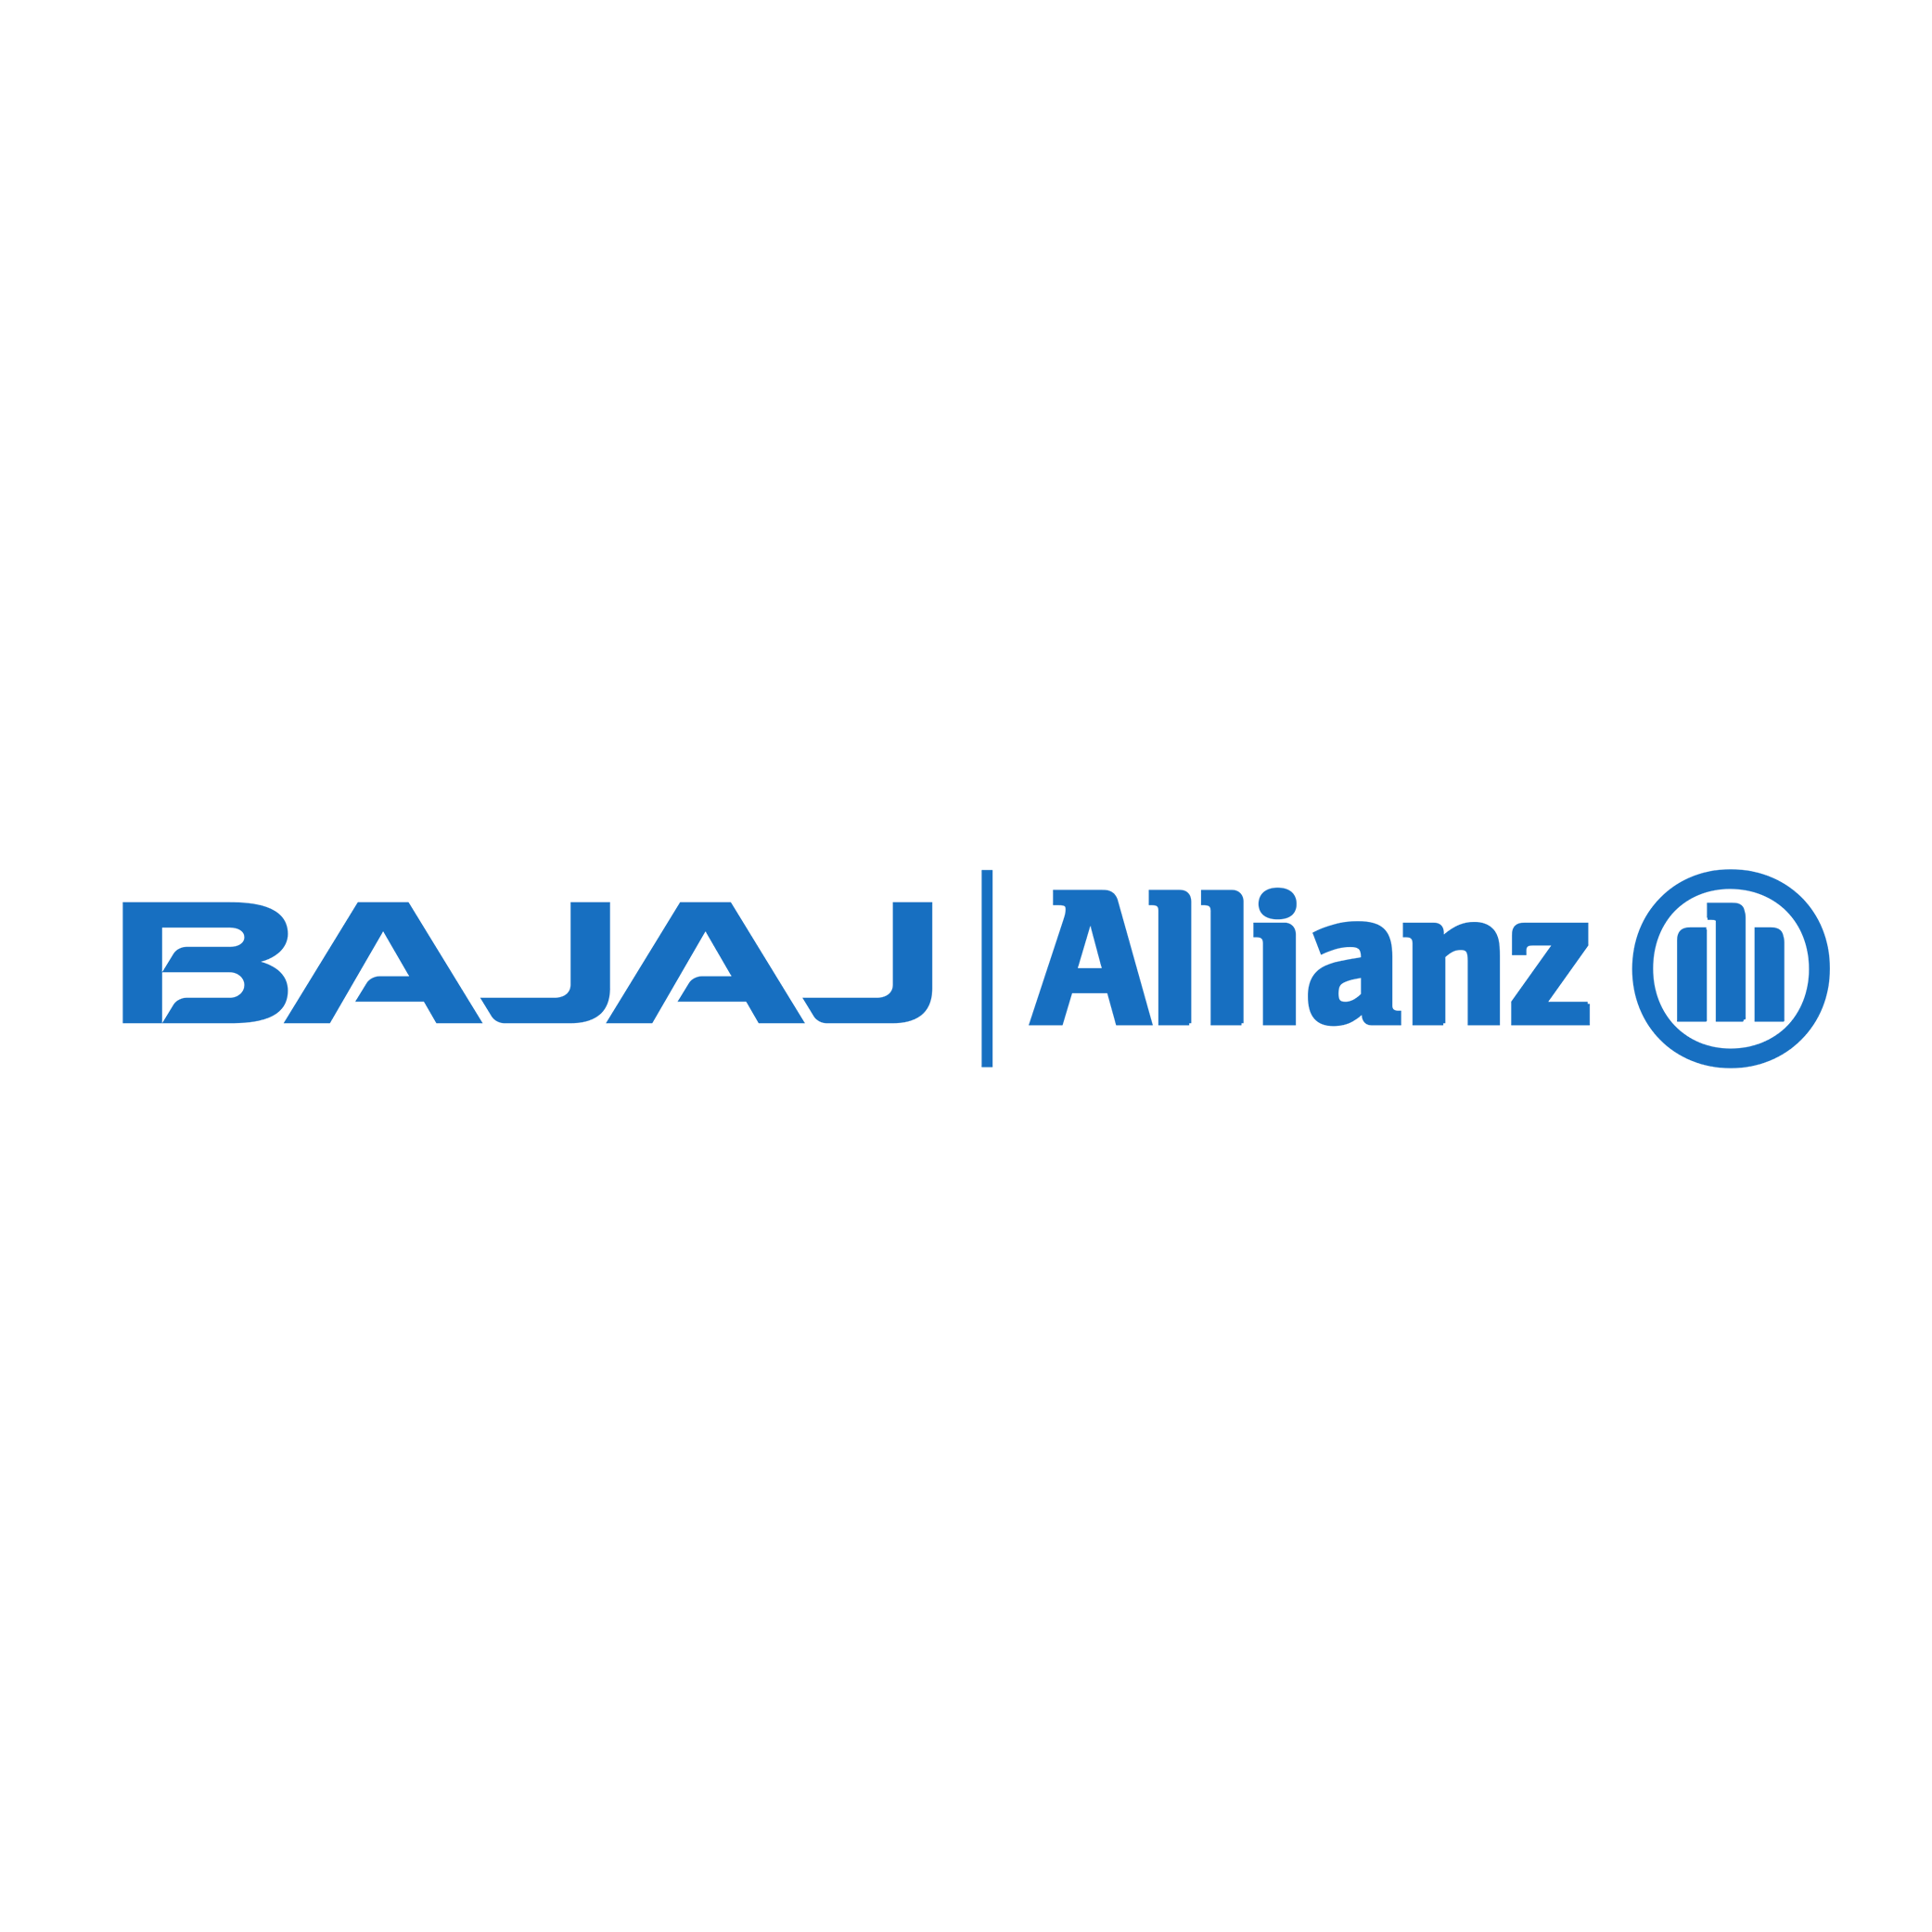 Bajaj Allianz Insurance with MultiTv | vod streaming services